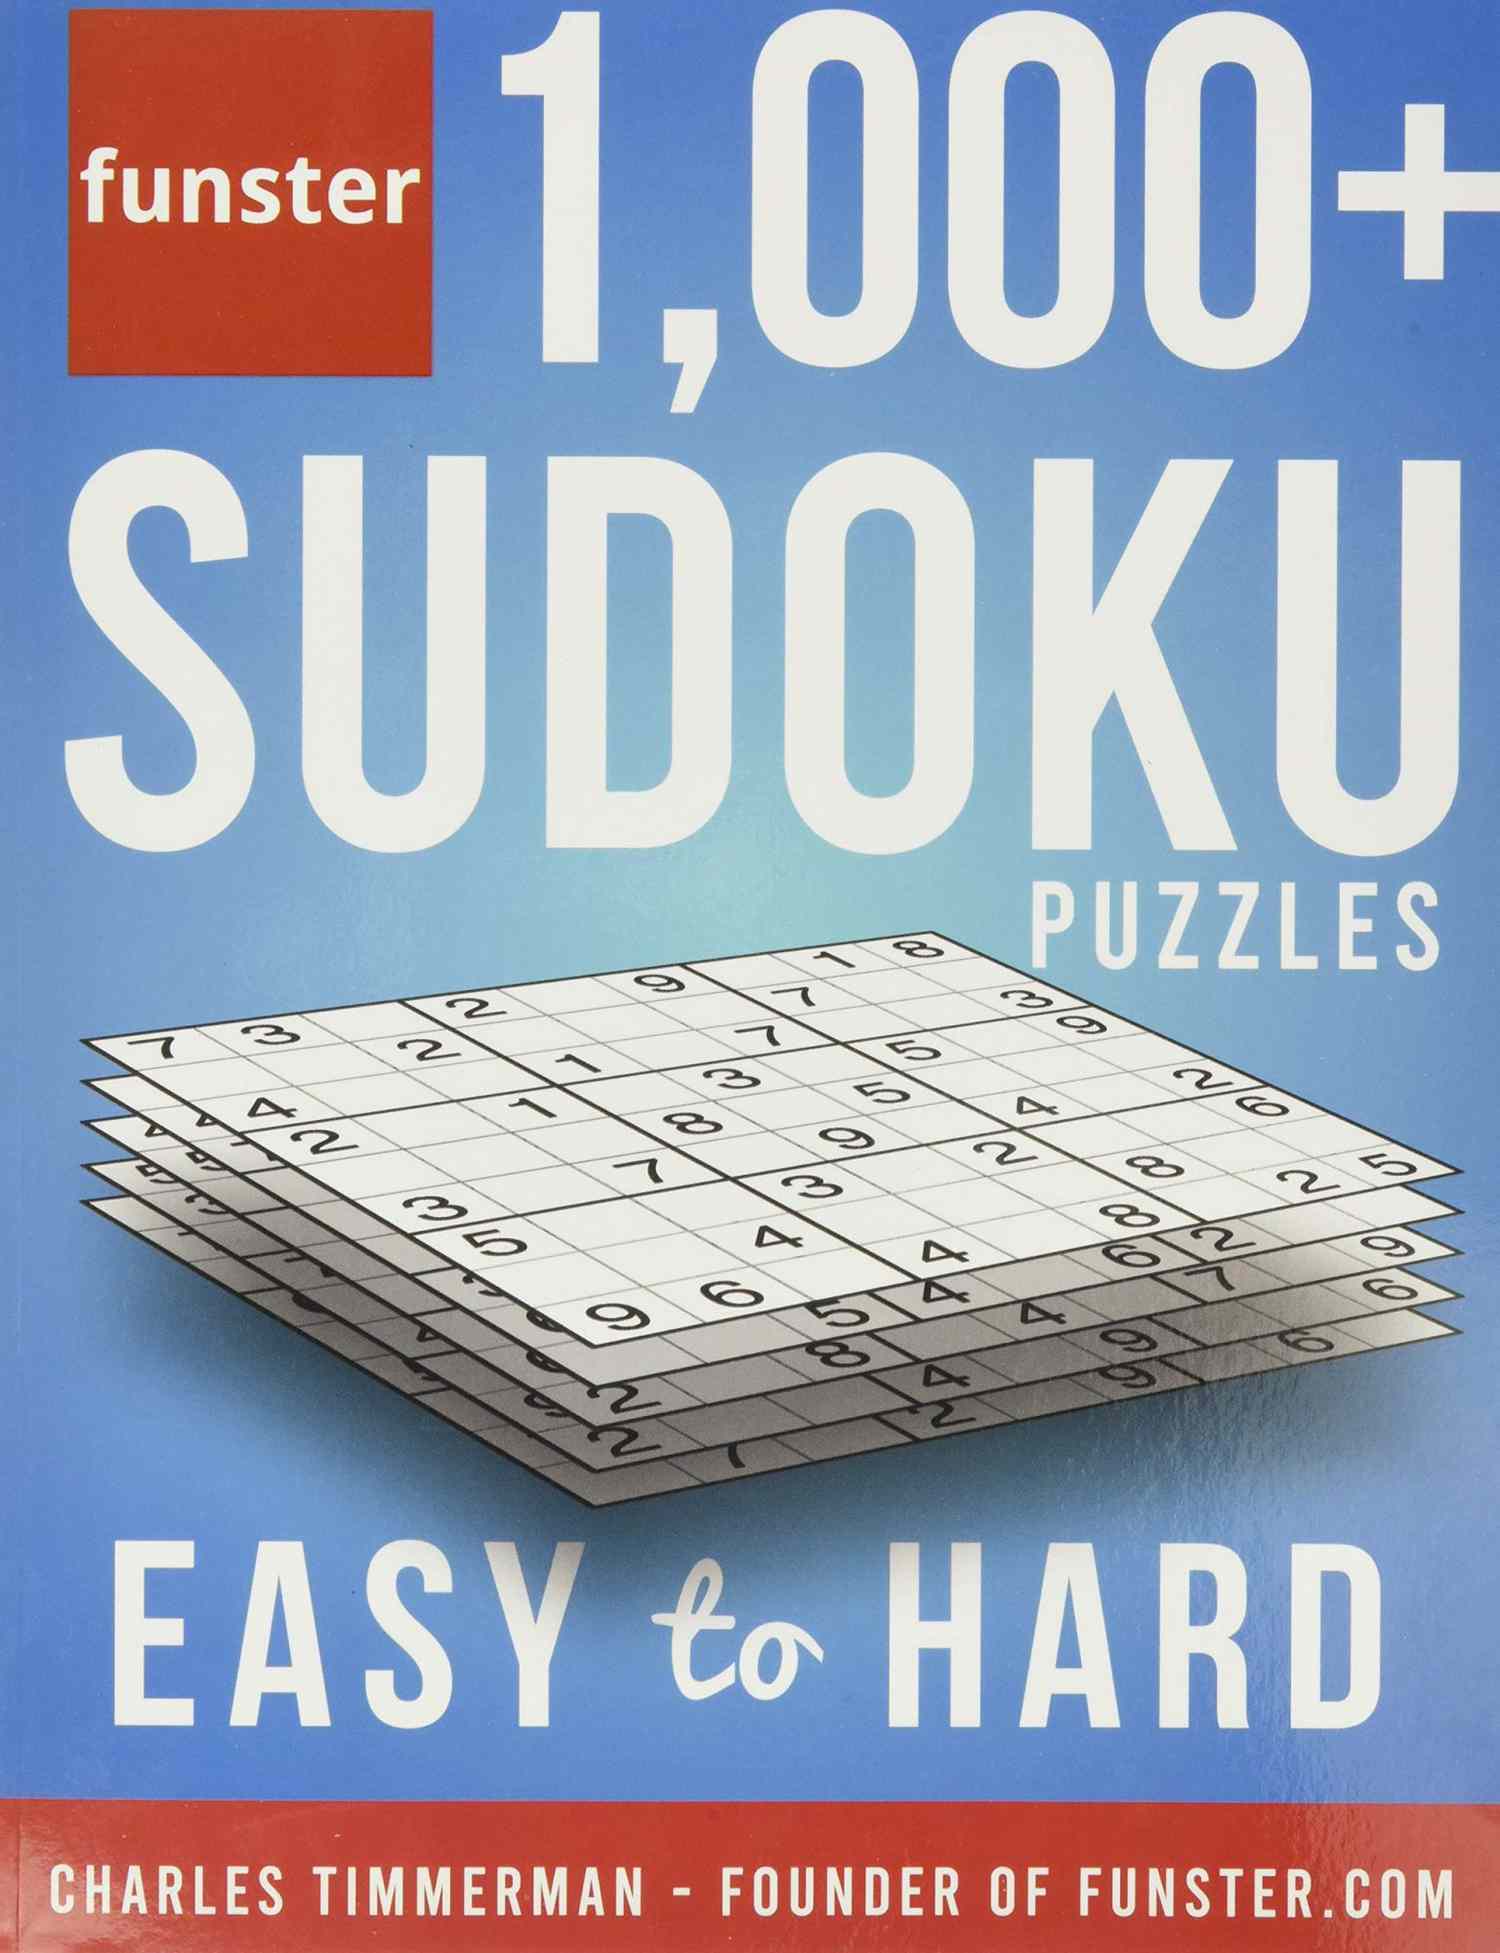 Funster 1,000+ Sudoku Puzzles